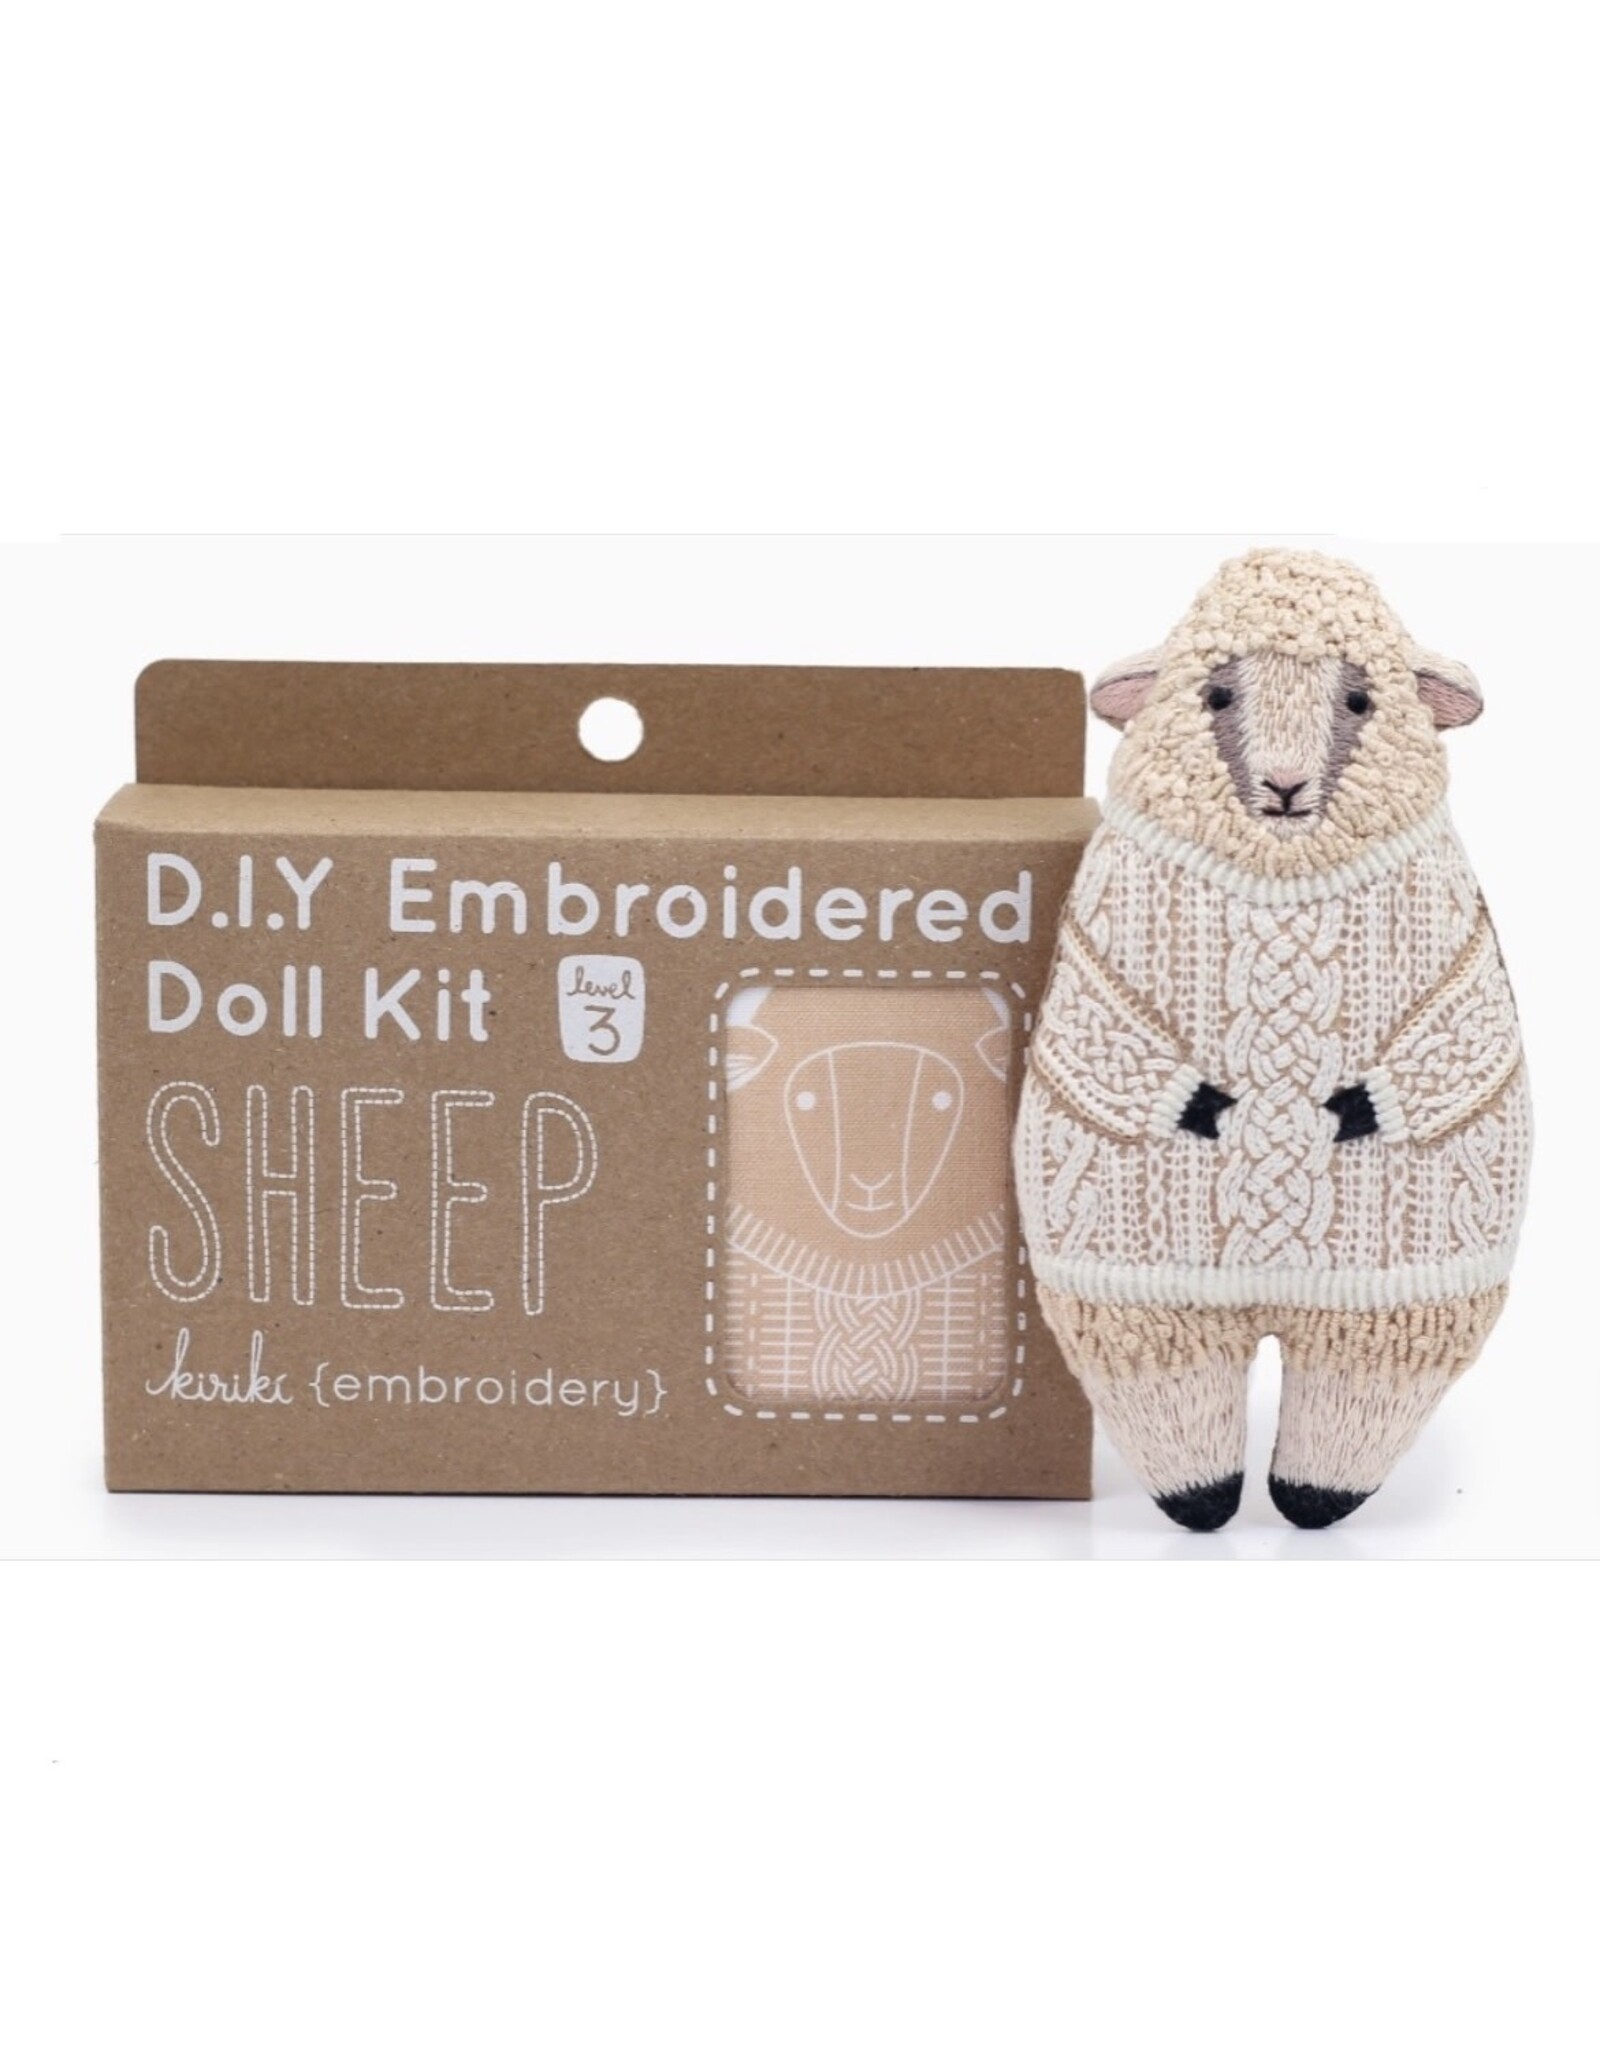 Kiriki Press Sheep - Embroidery Kit w/ Hoop